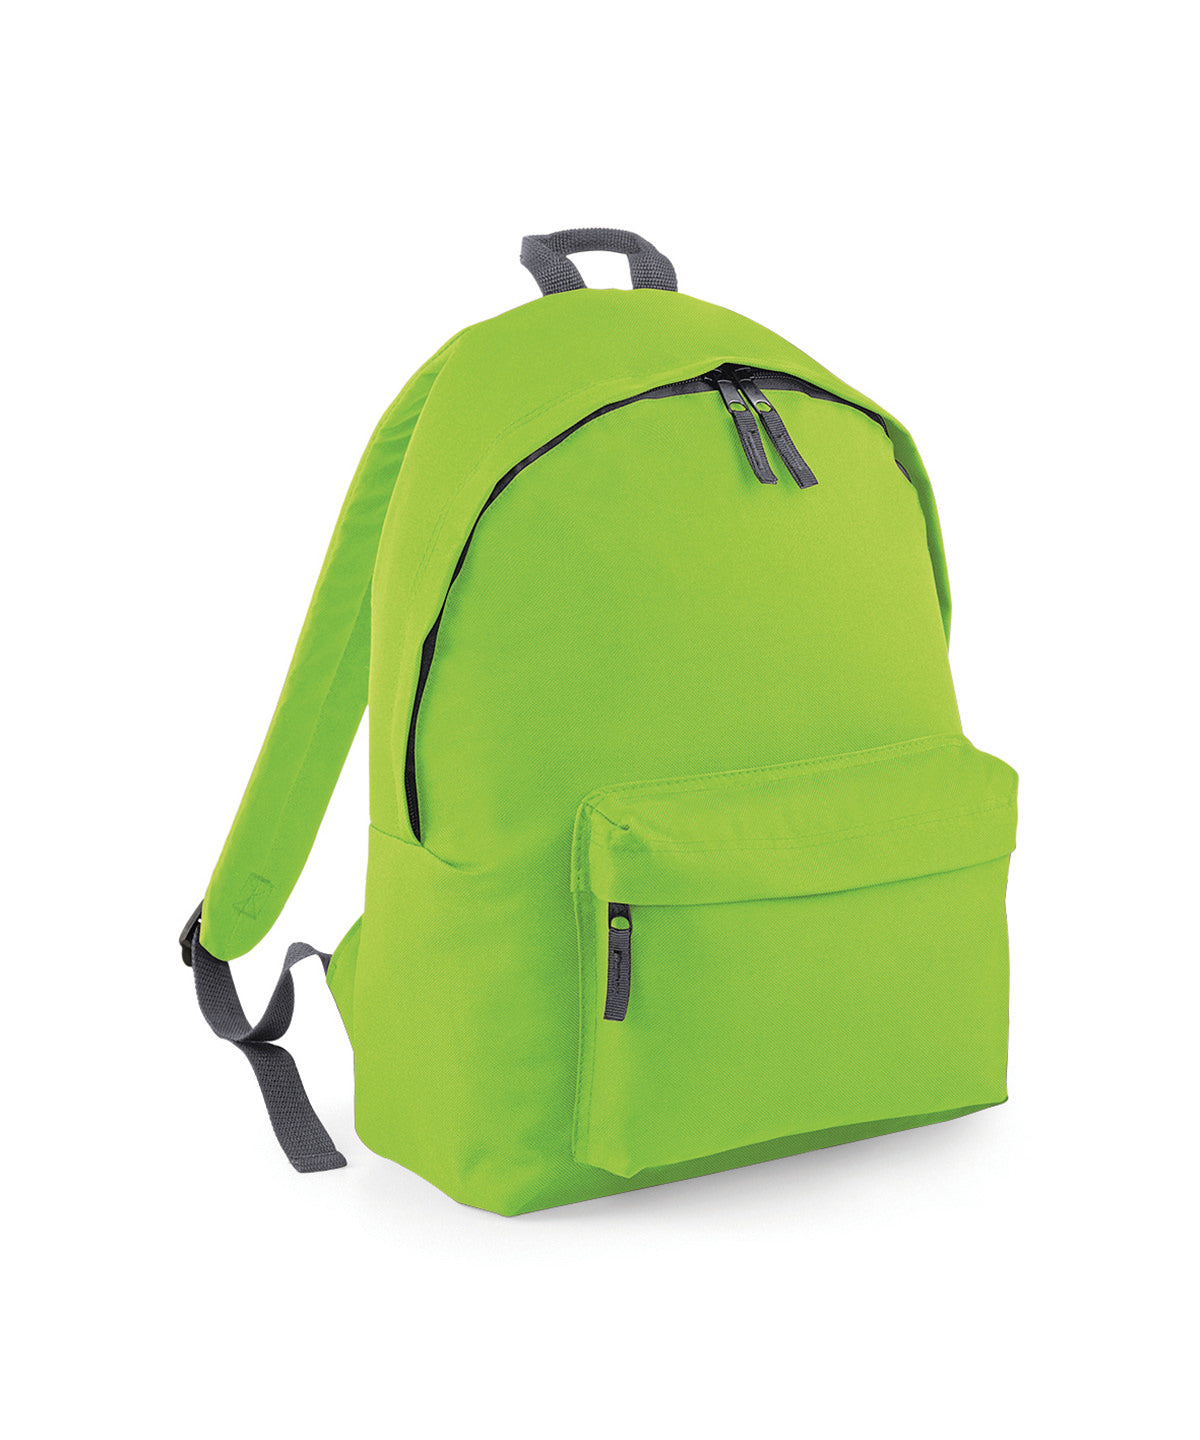 Personalised Bags - Lime Bagbase Original fashion backpack